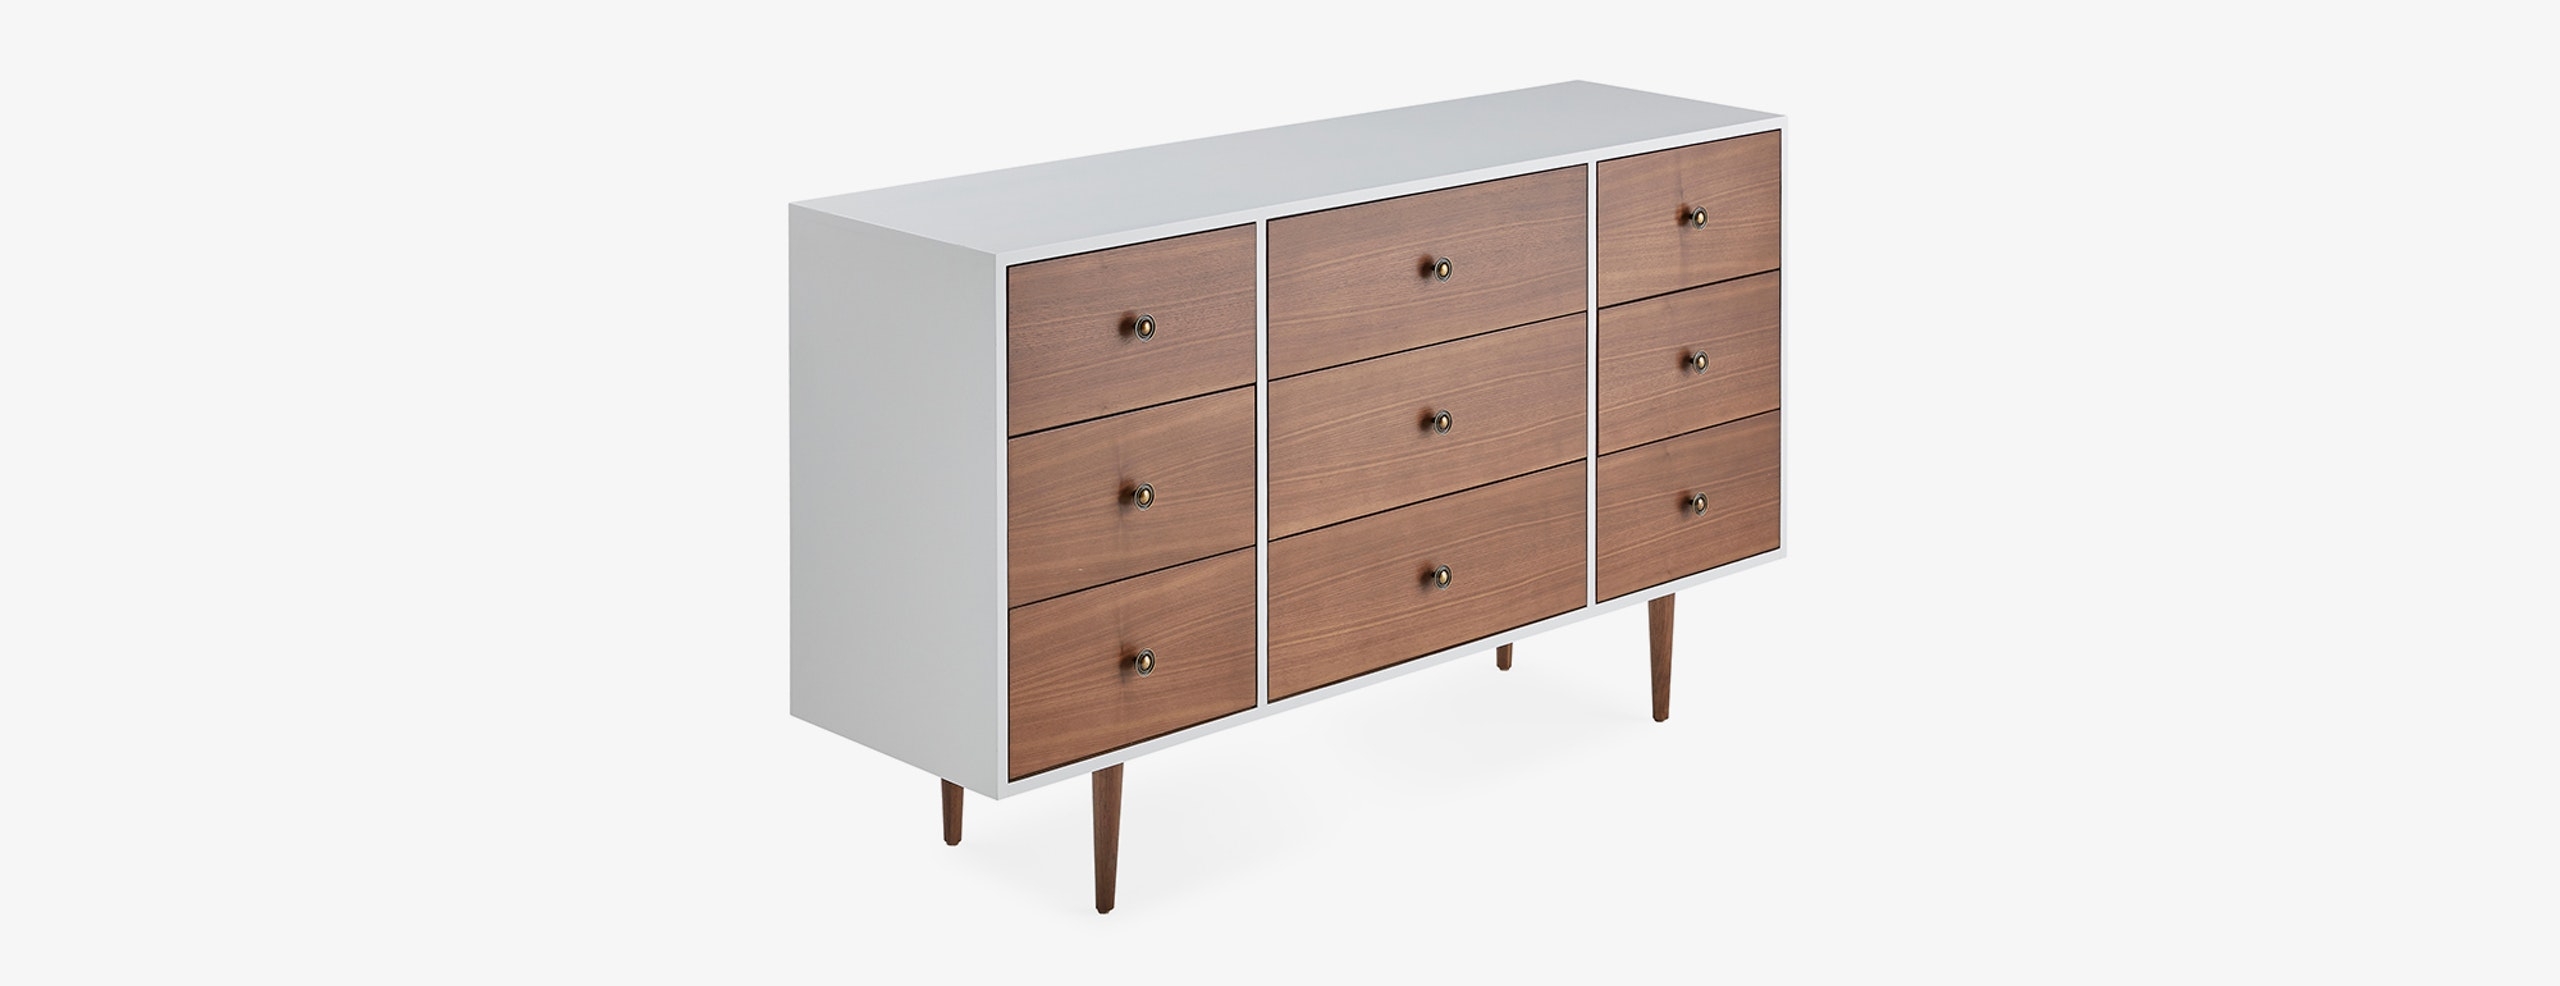 Blythe Mid Century Modern Dresser - Walnut - Image 2